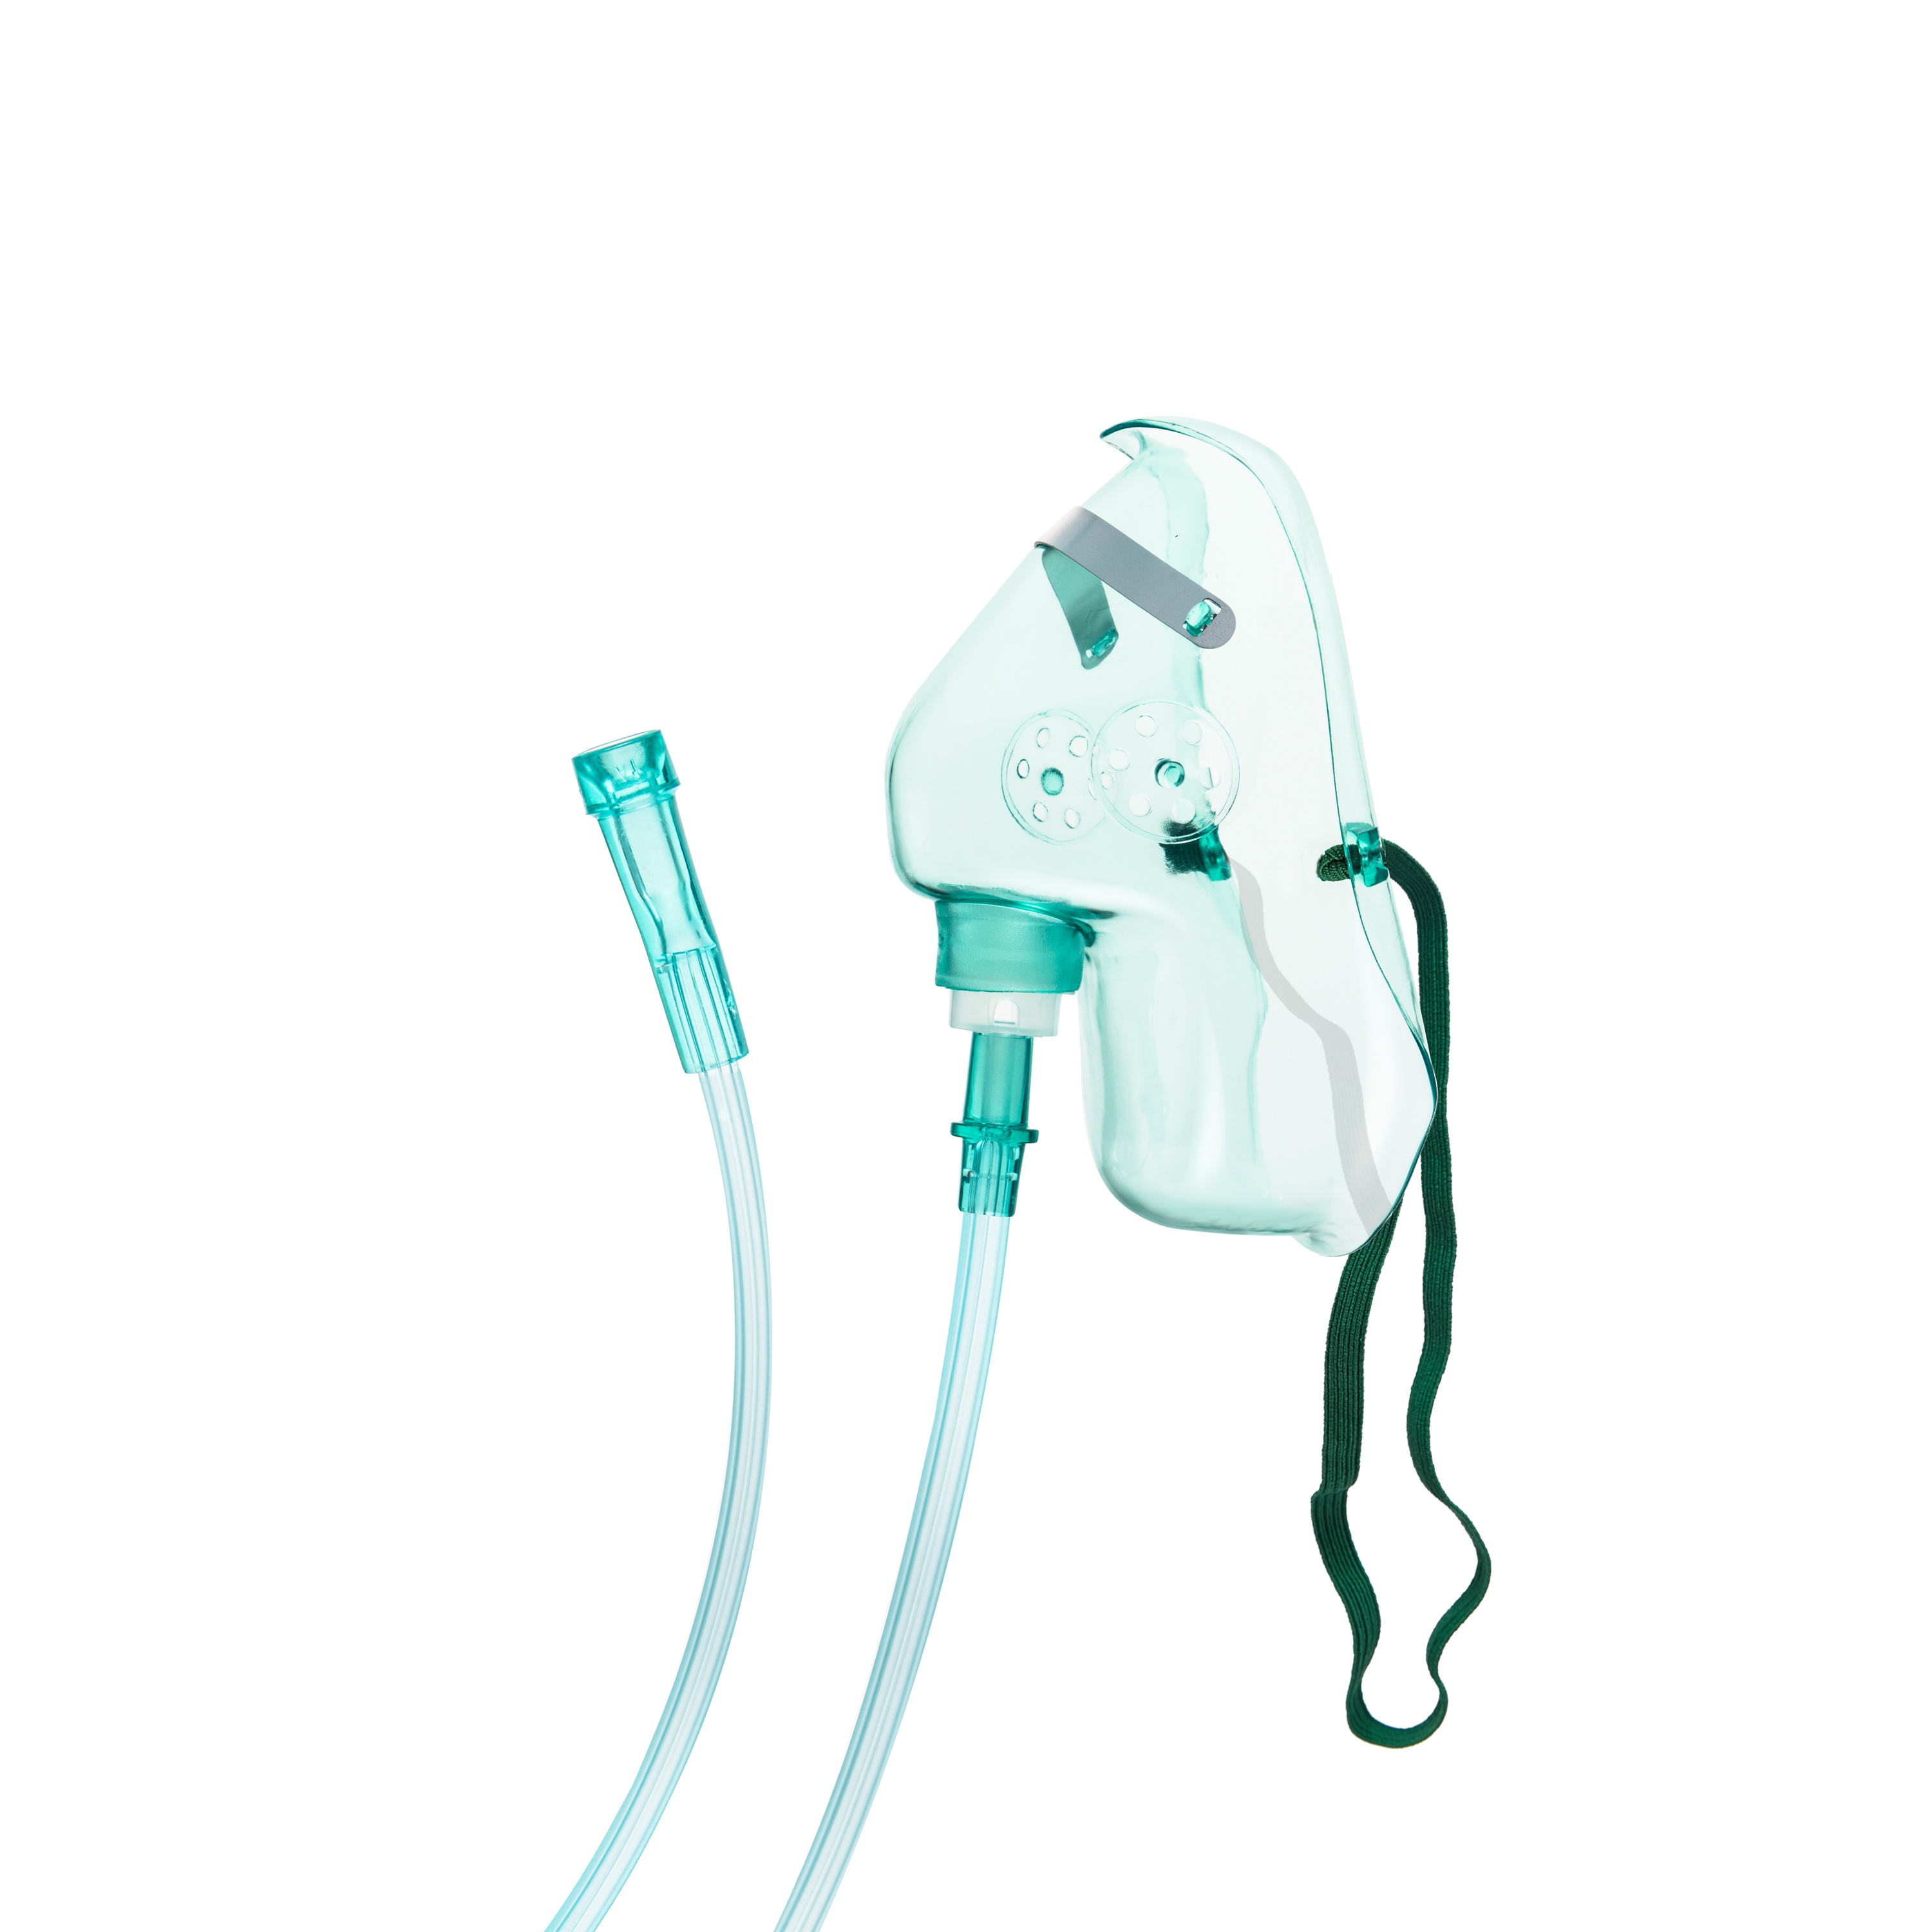 Medical Oxygen Nebulizer Mask With Tubing